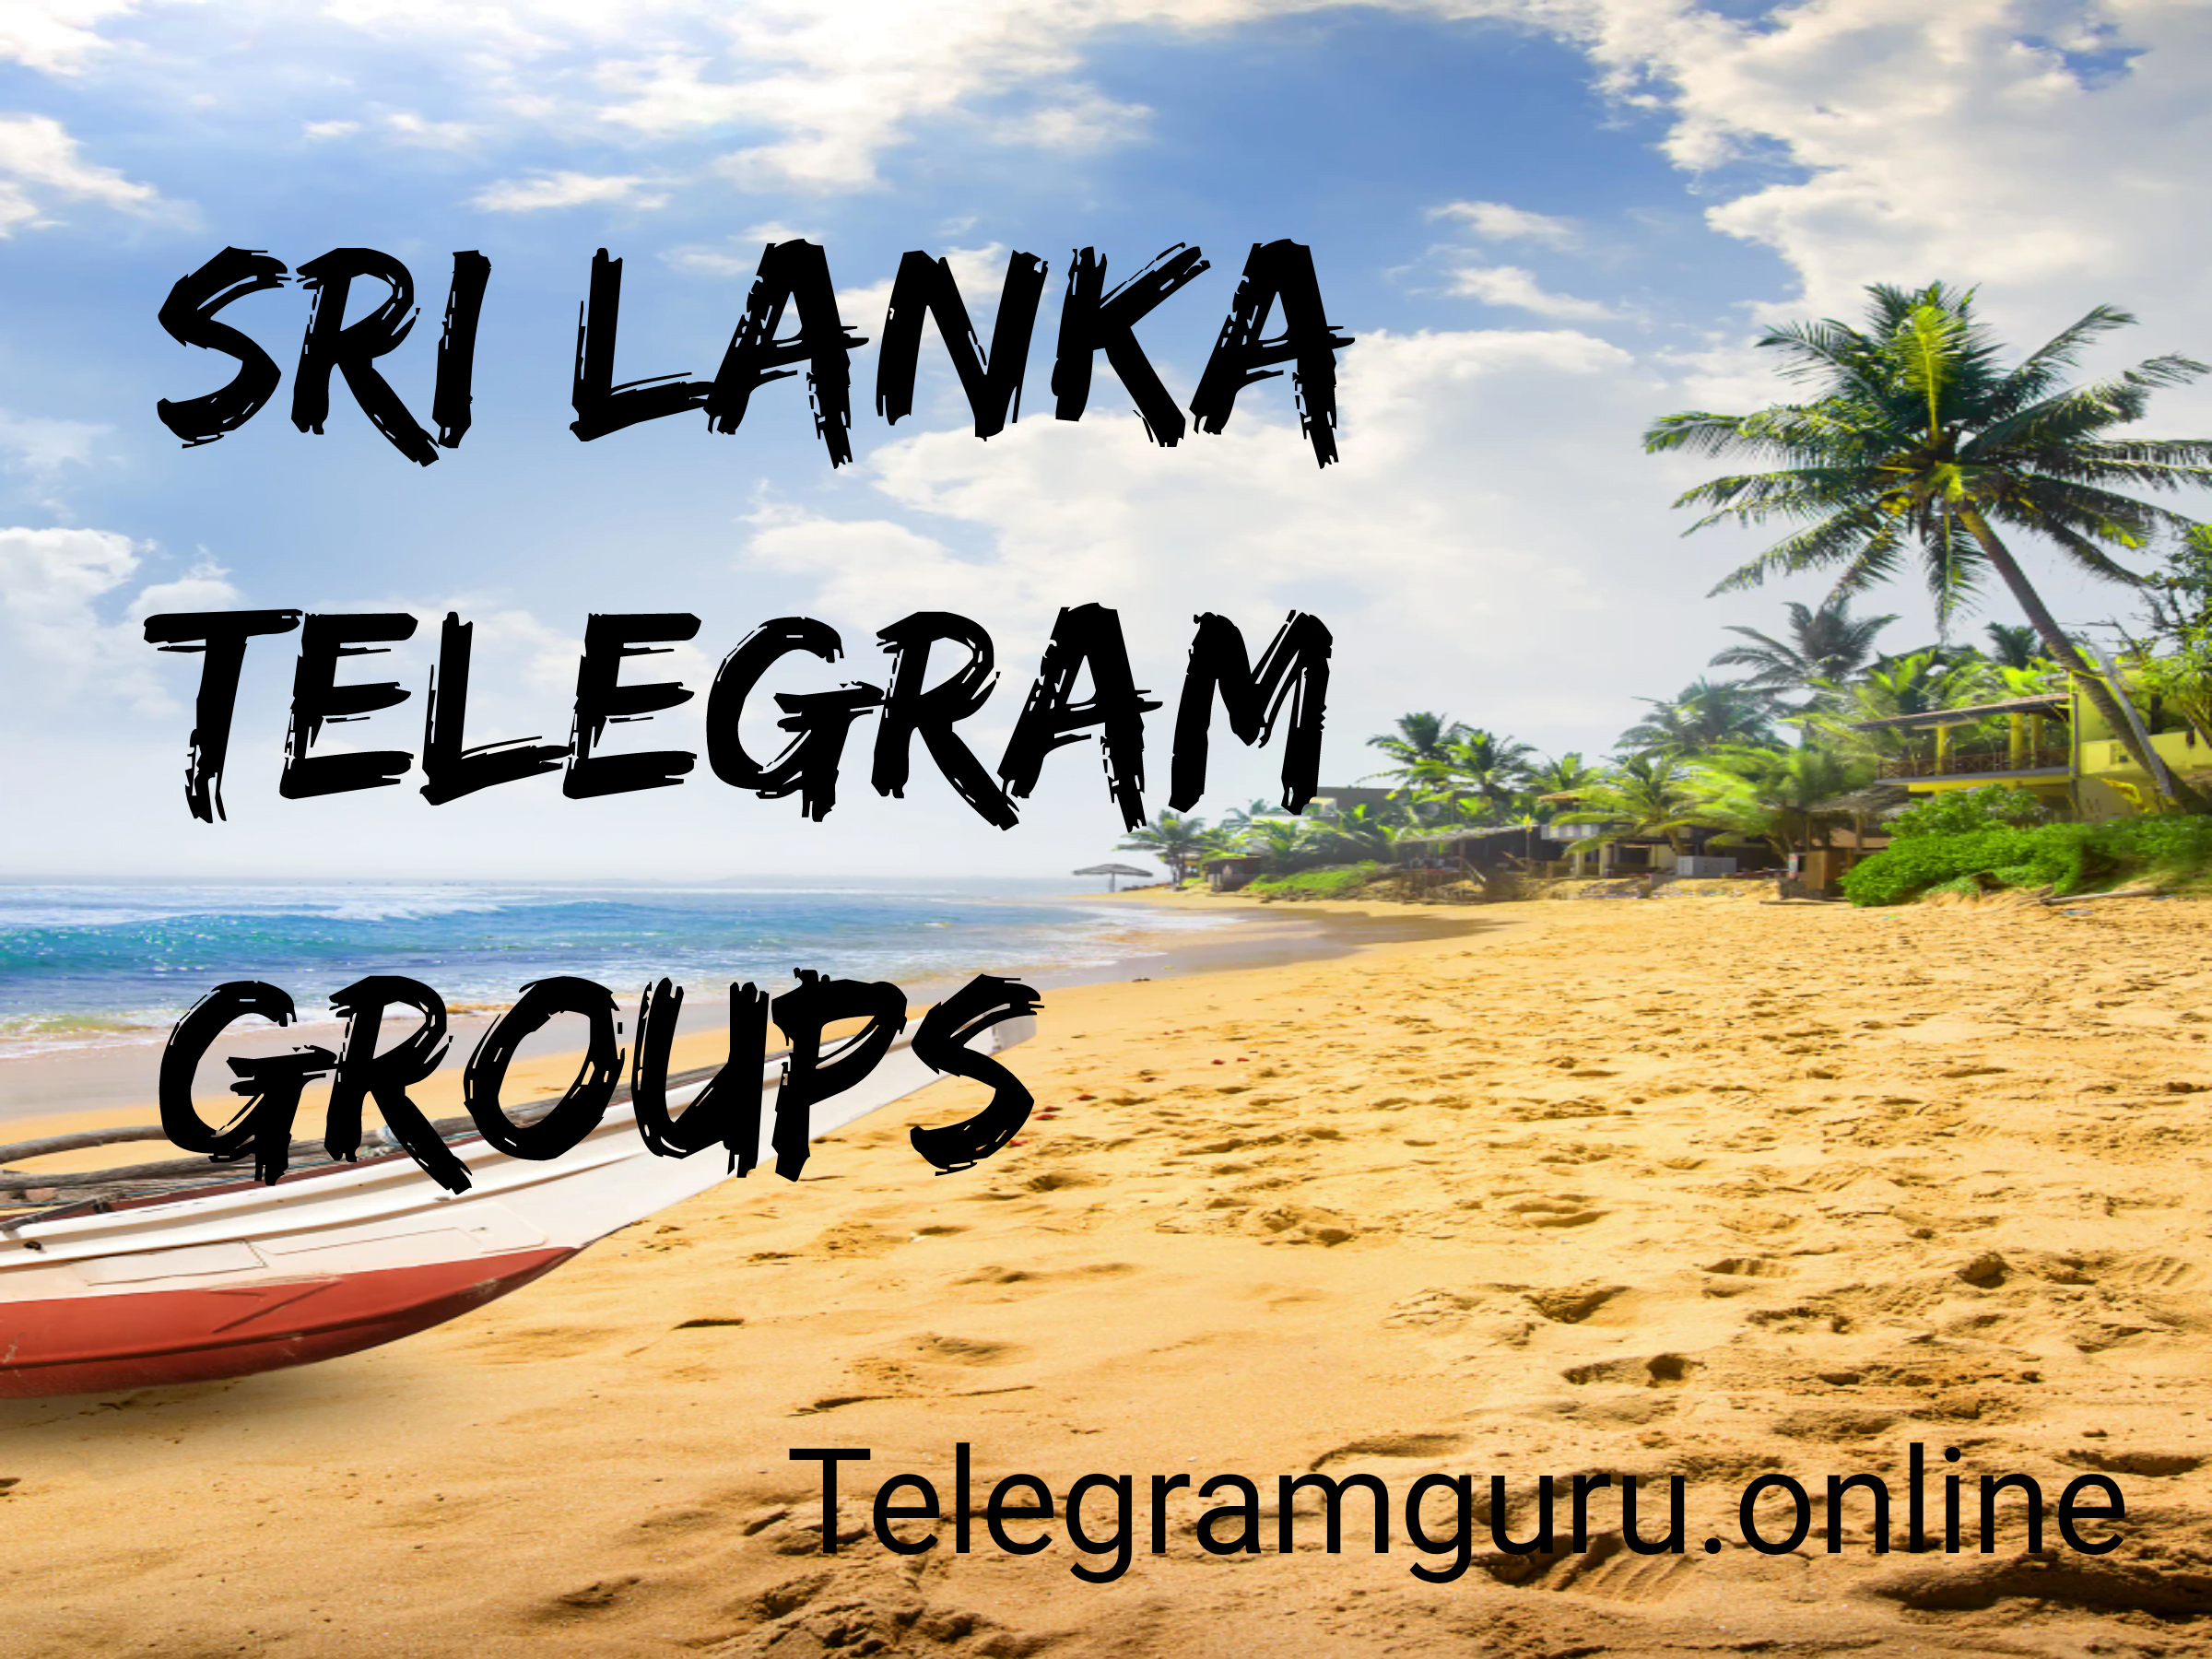 Sri lanka telegram groups and channels - Telegram GURU